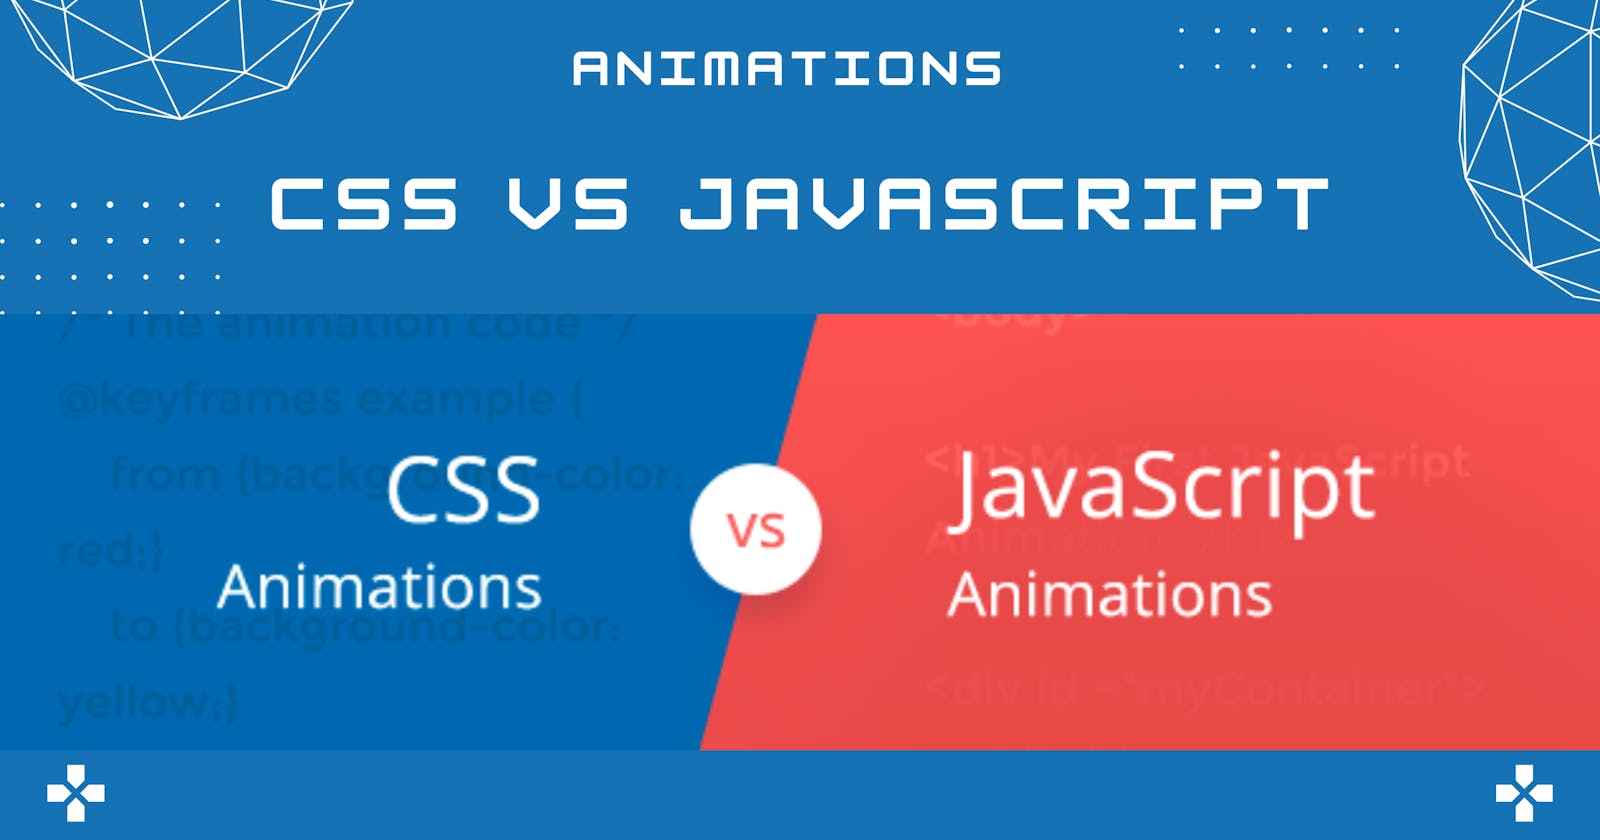 CSS vs JavaScript Animations